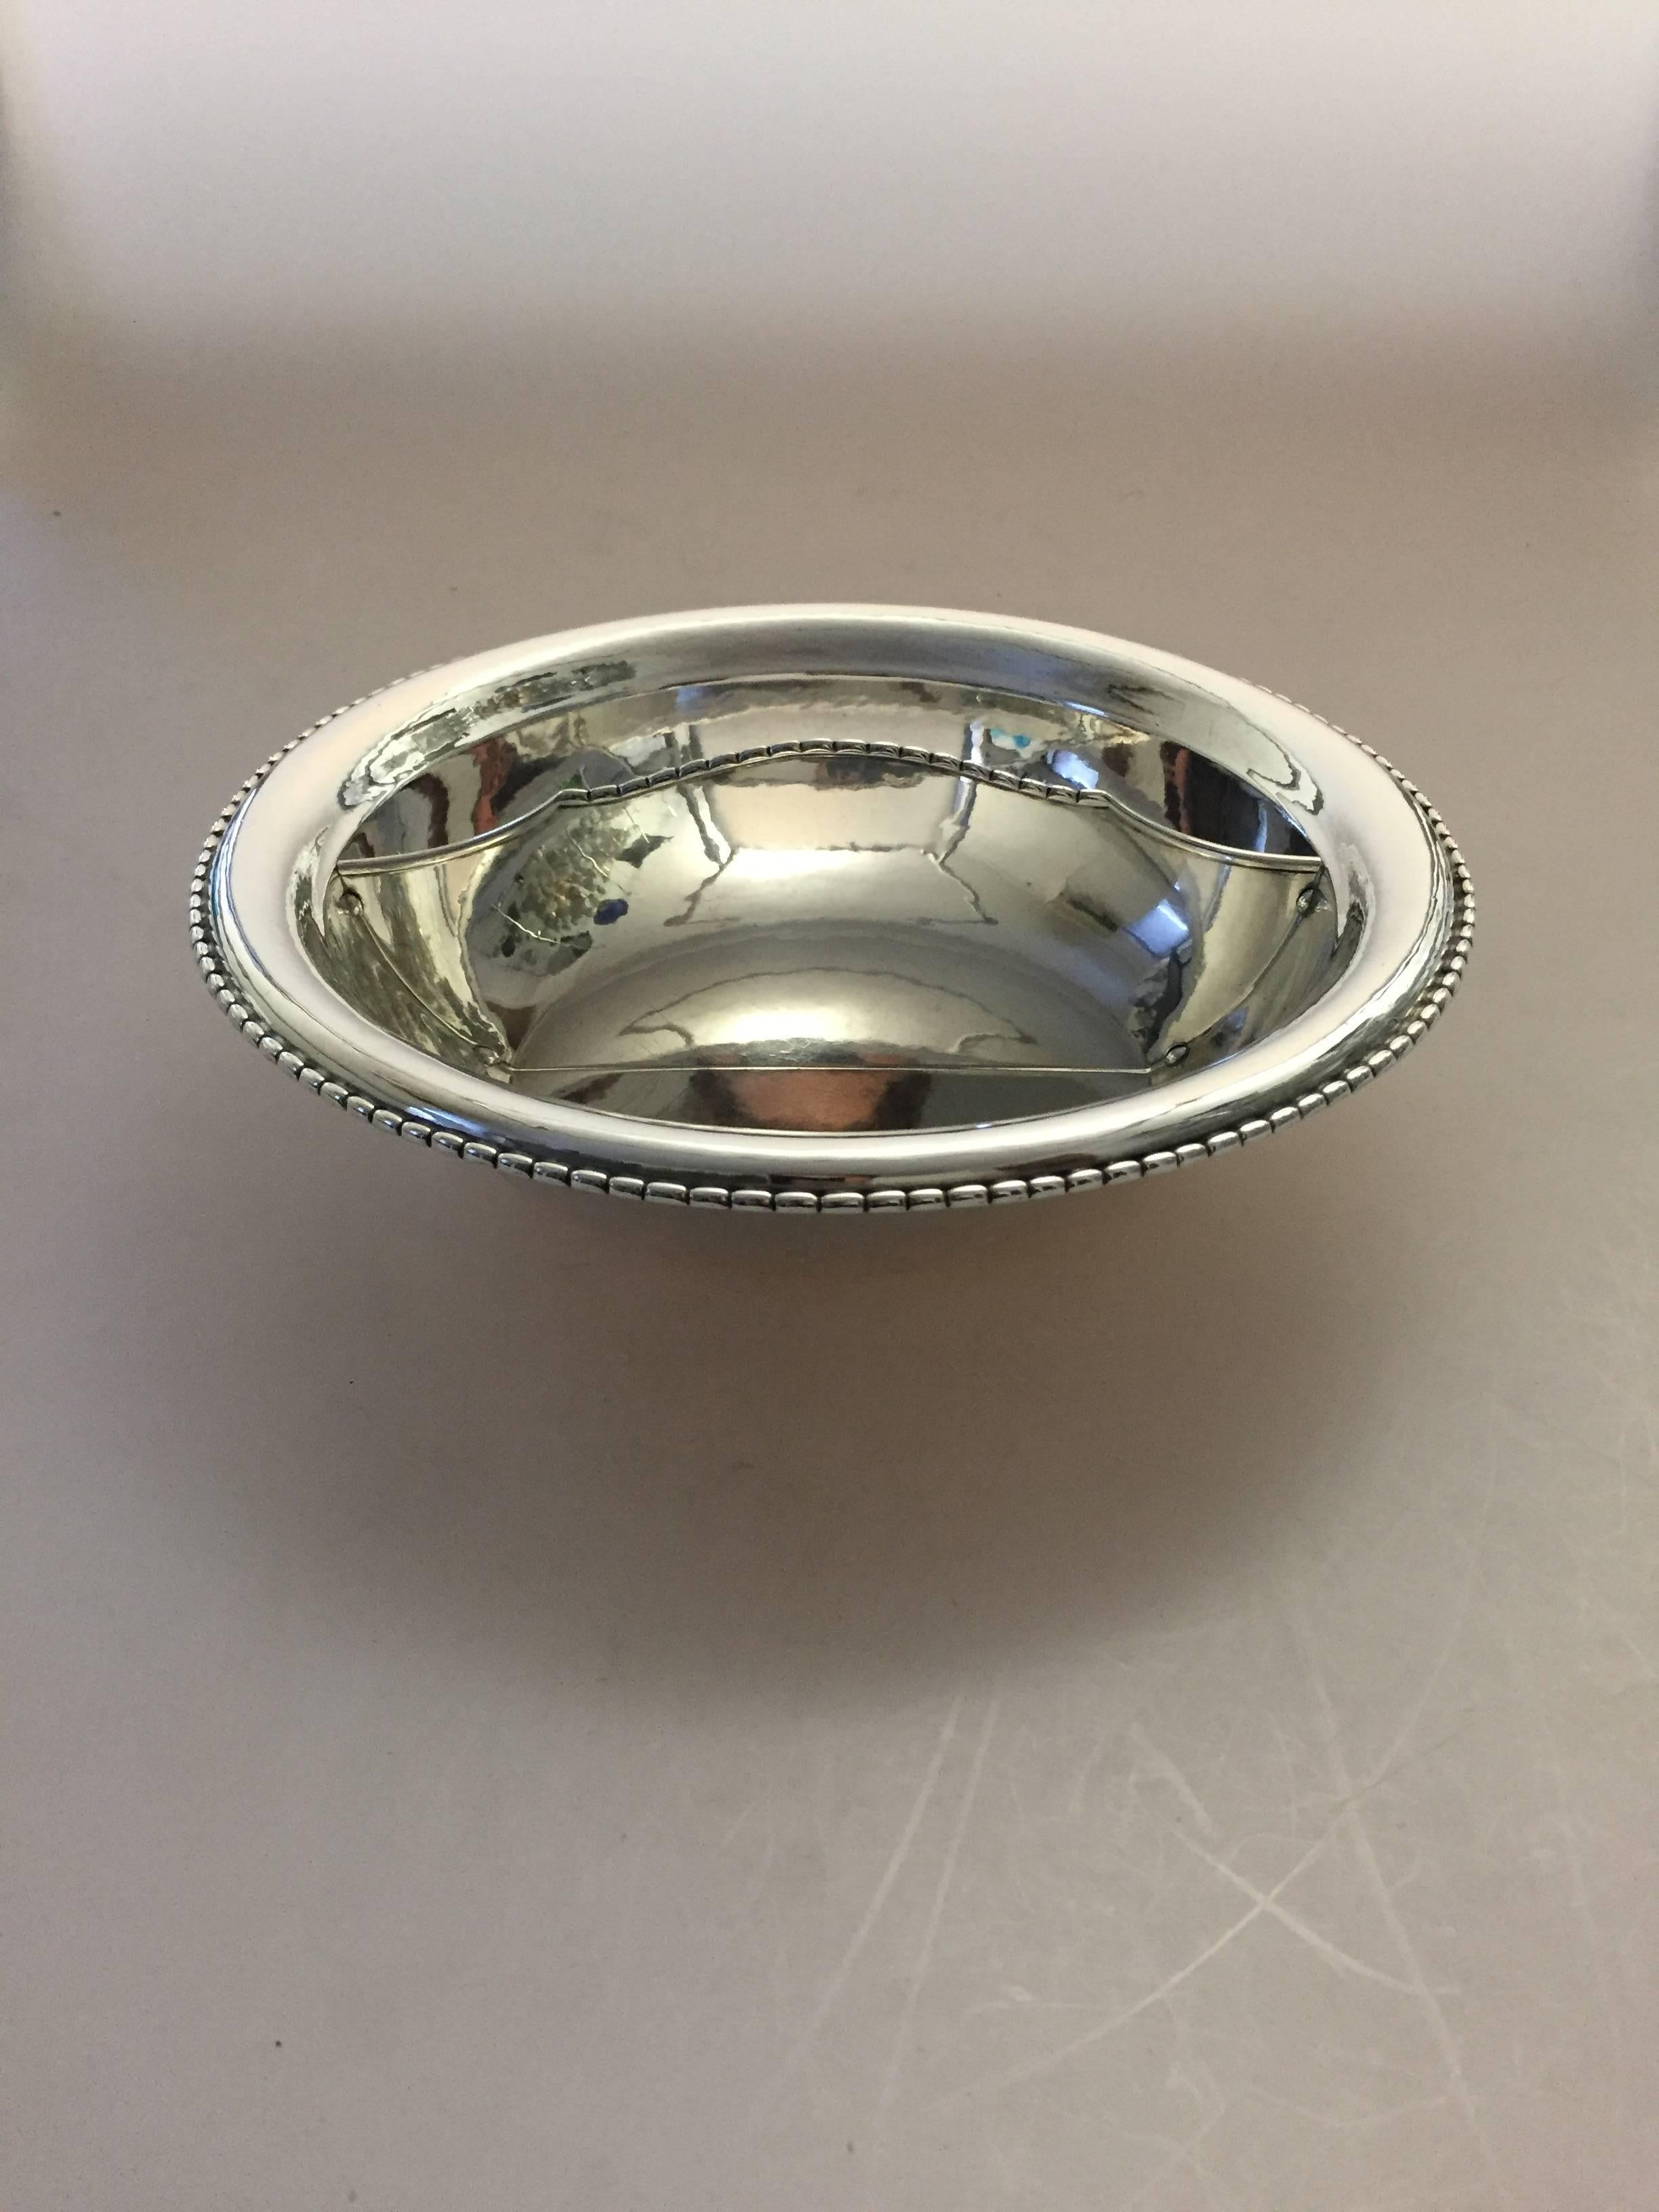 Georg Jensen sterling silver bowl with divider #290L.

Measures 25.5 cm dia.